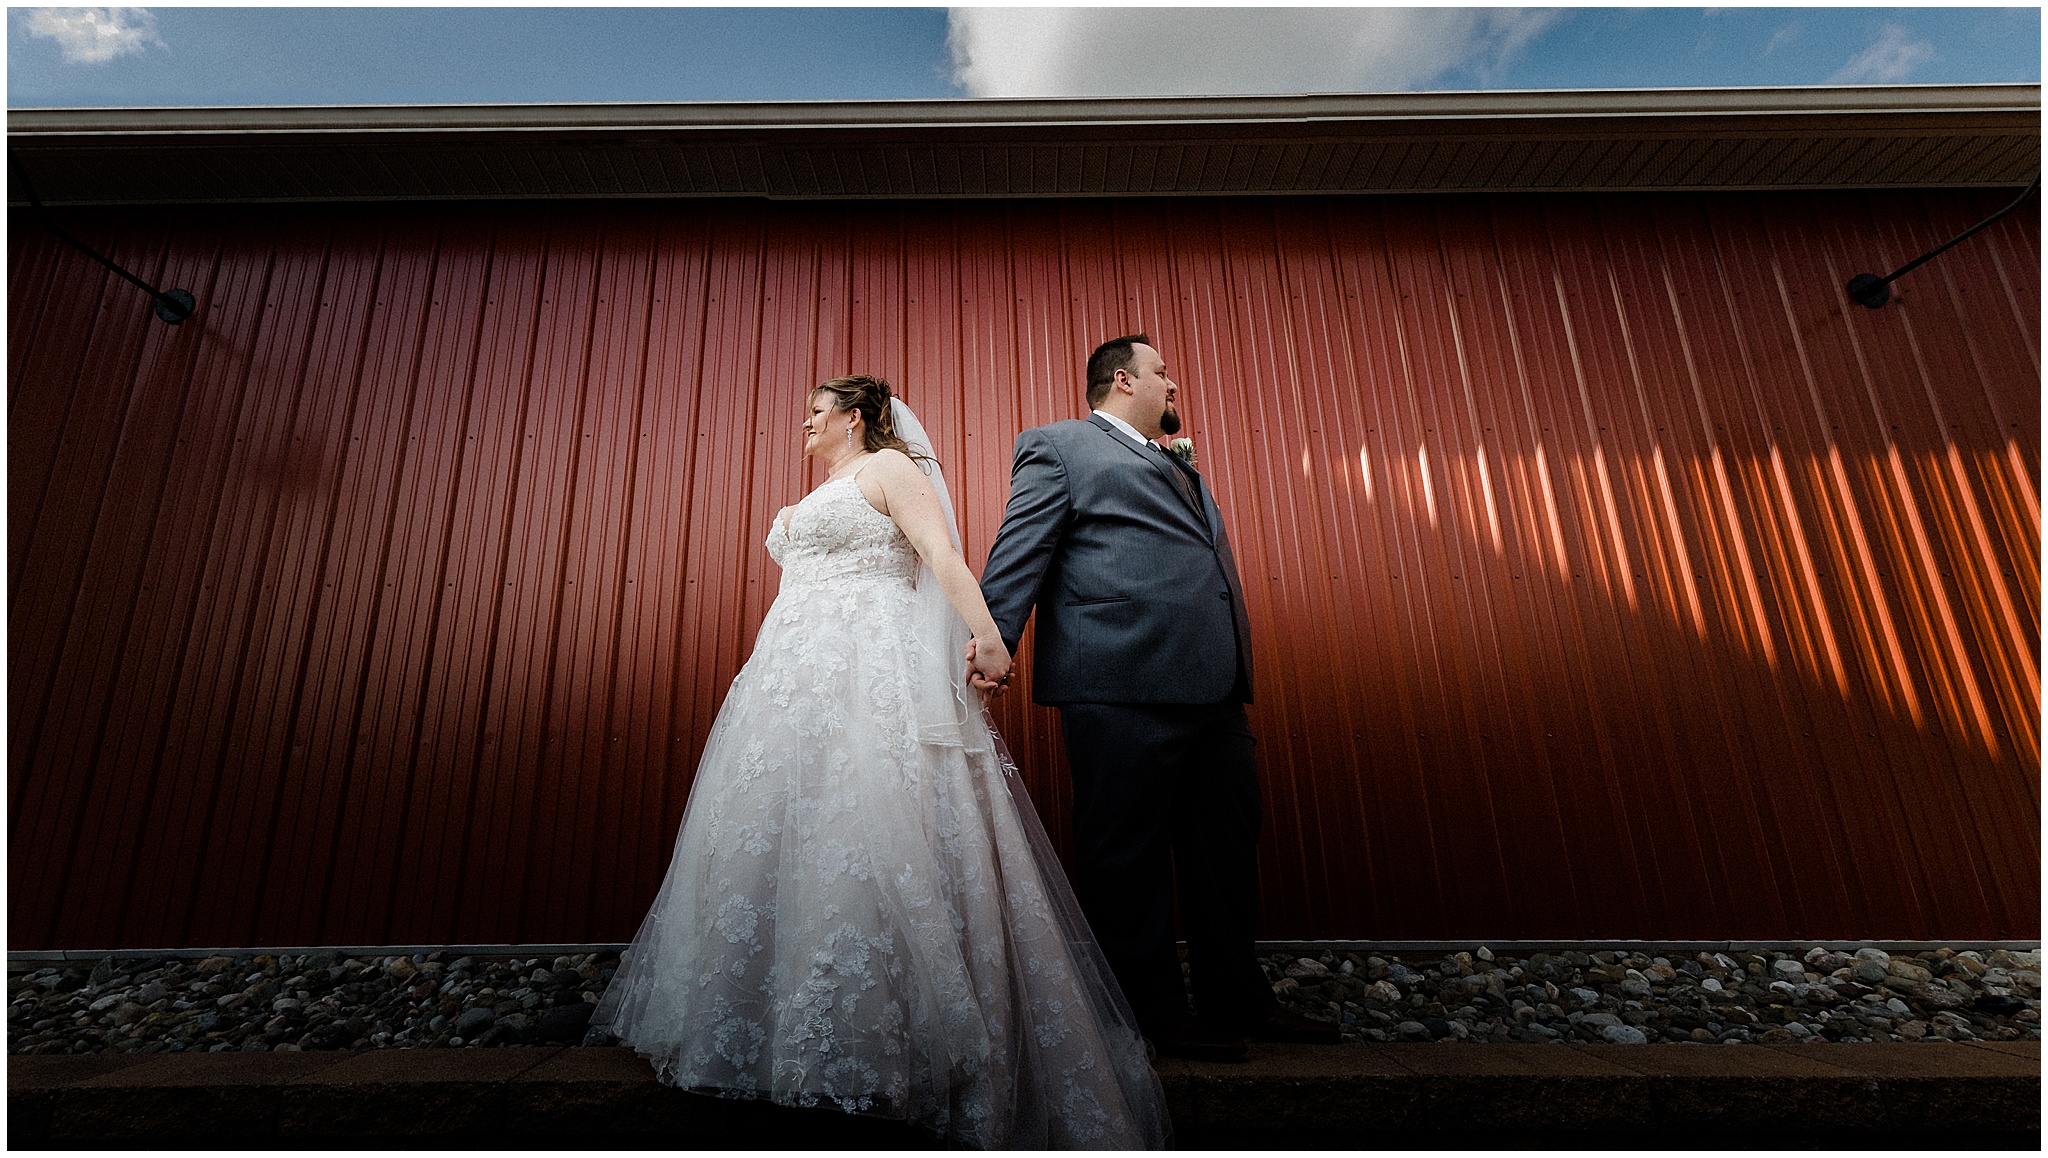 Barn on Bridge Wedding - Jenn and Paulo - Pennsylvania Wedding Photographer - Christopher Ginn Photography_0034.jpg